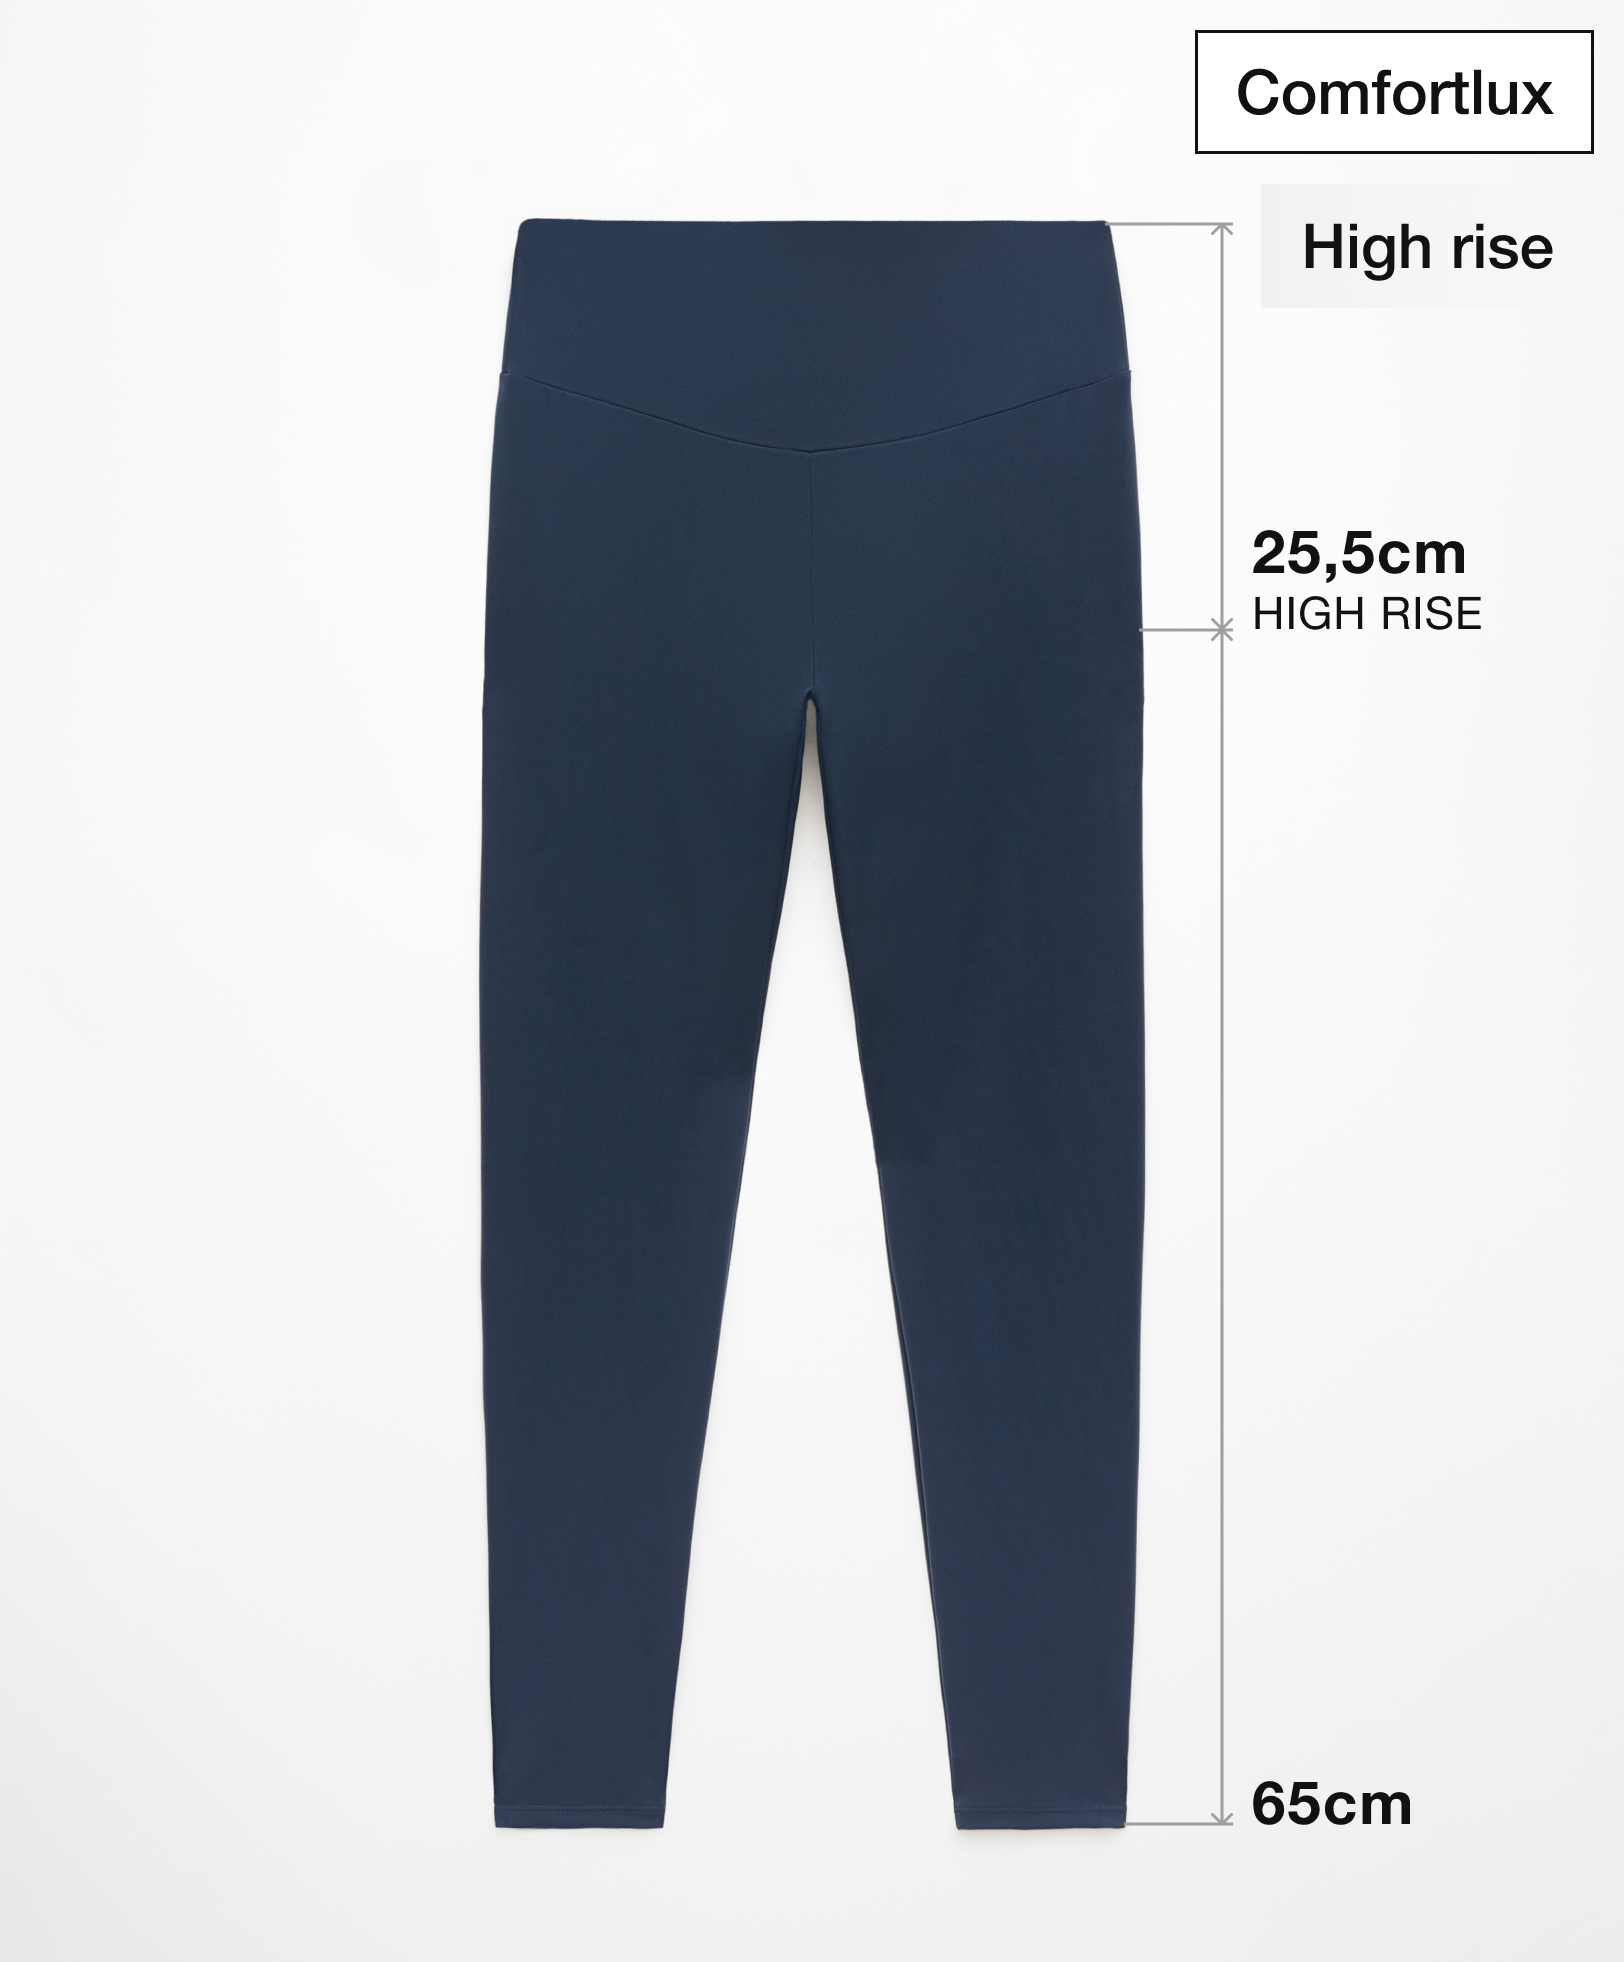 Comfortlux high-rise ankle-length leggings